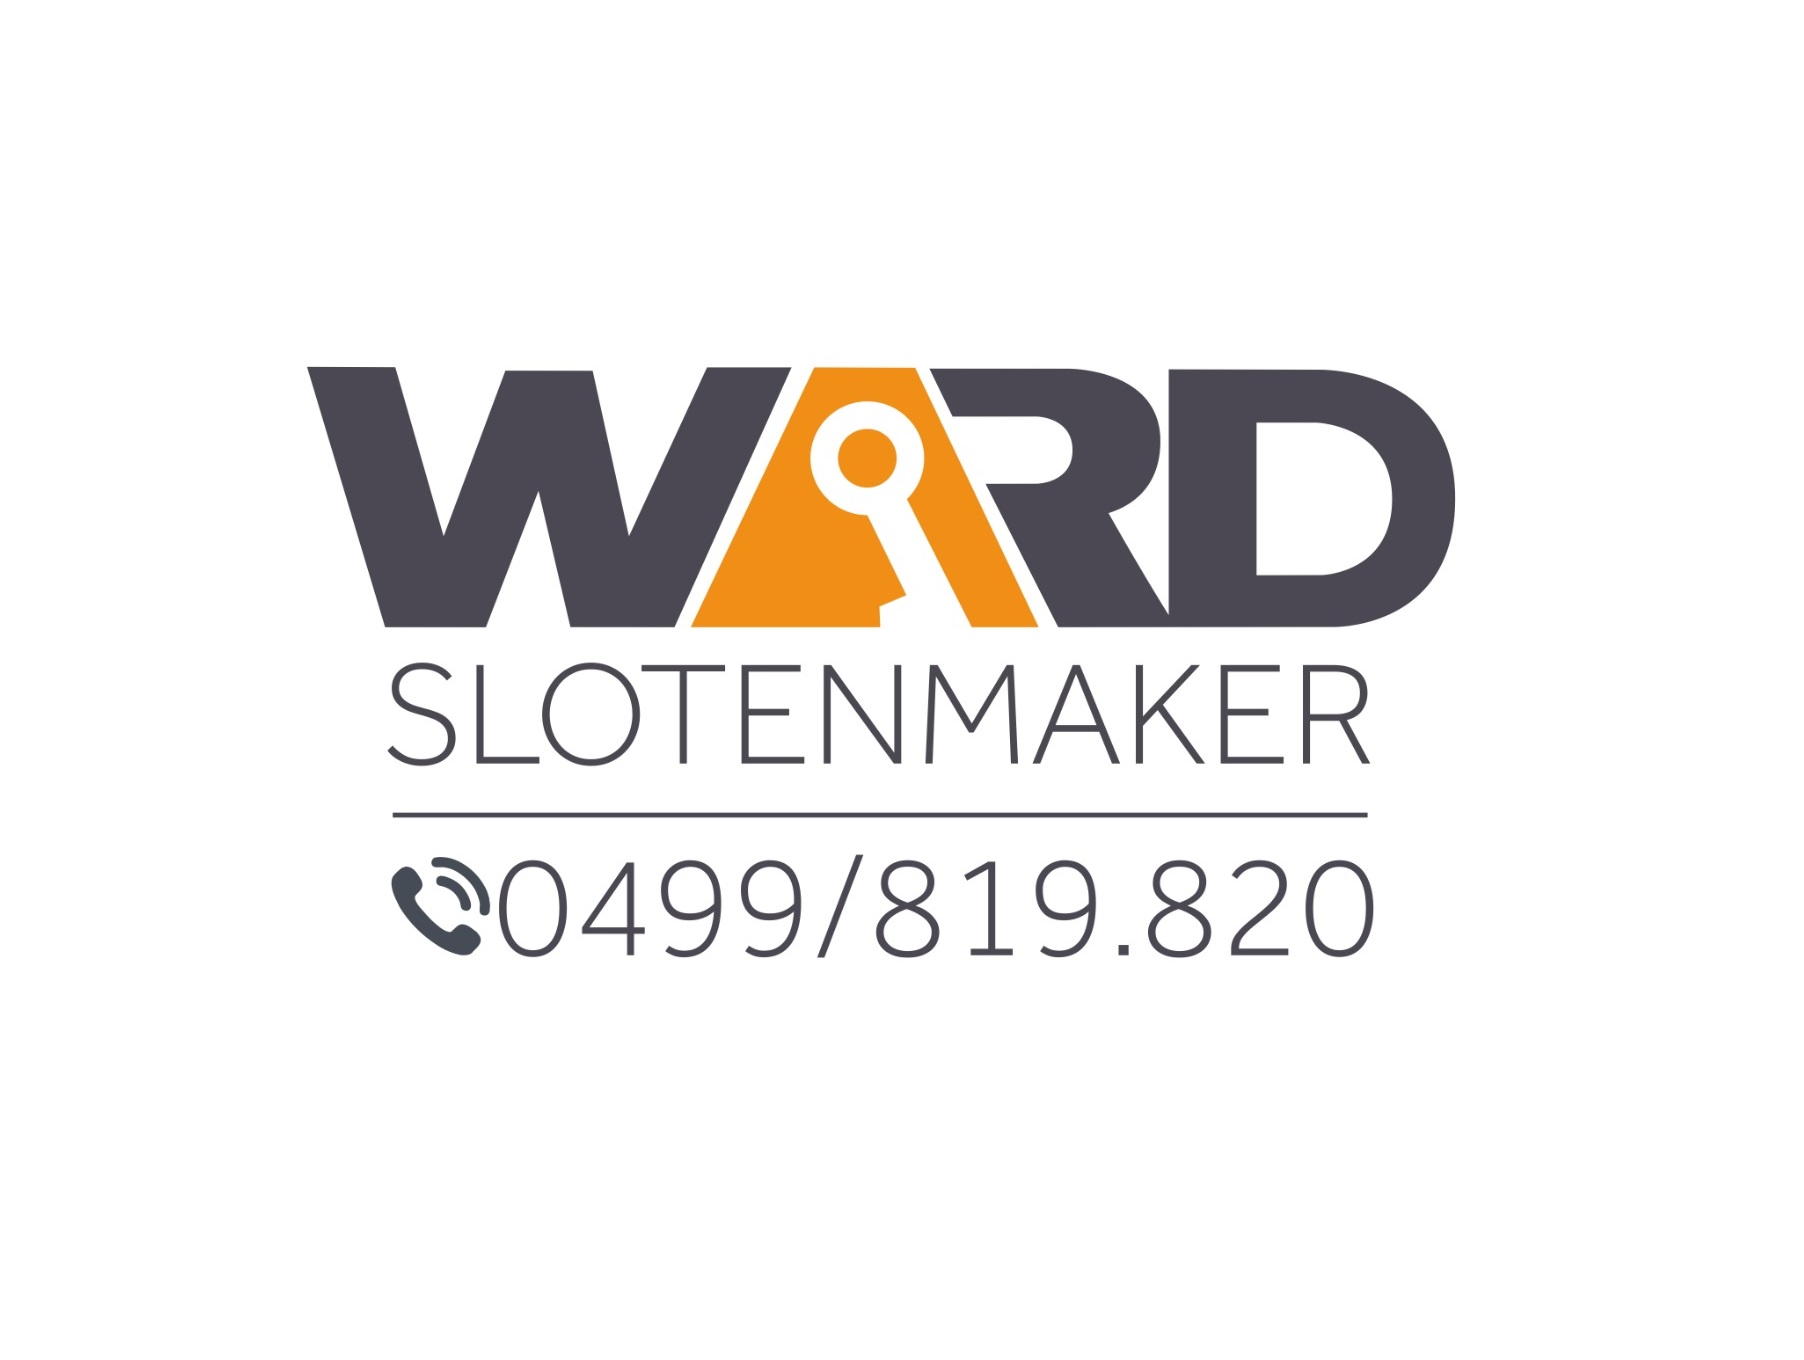 Slotenmaker Ward